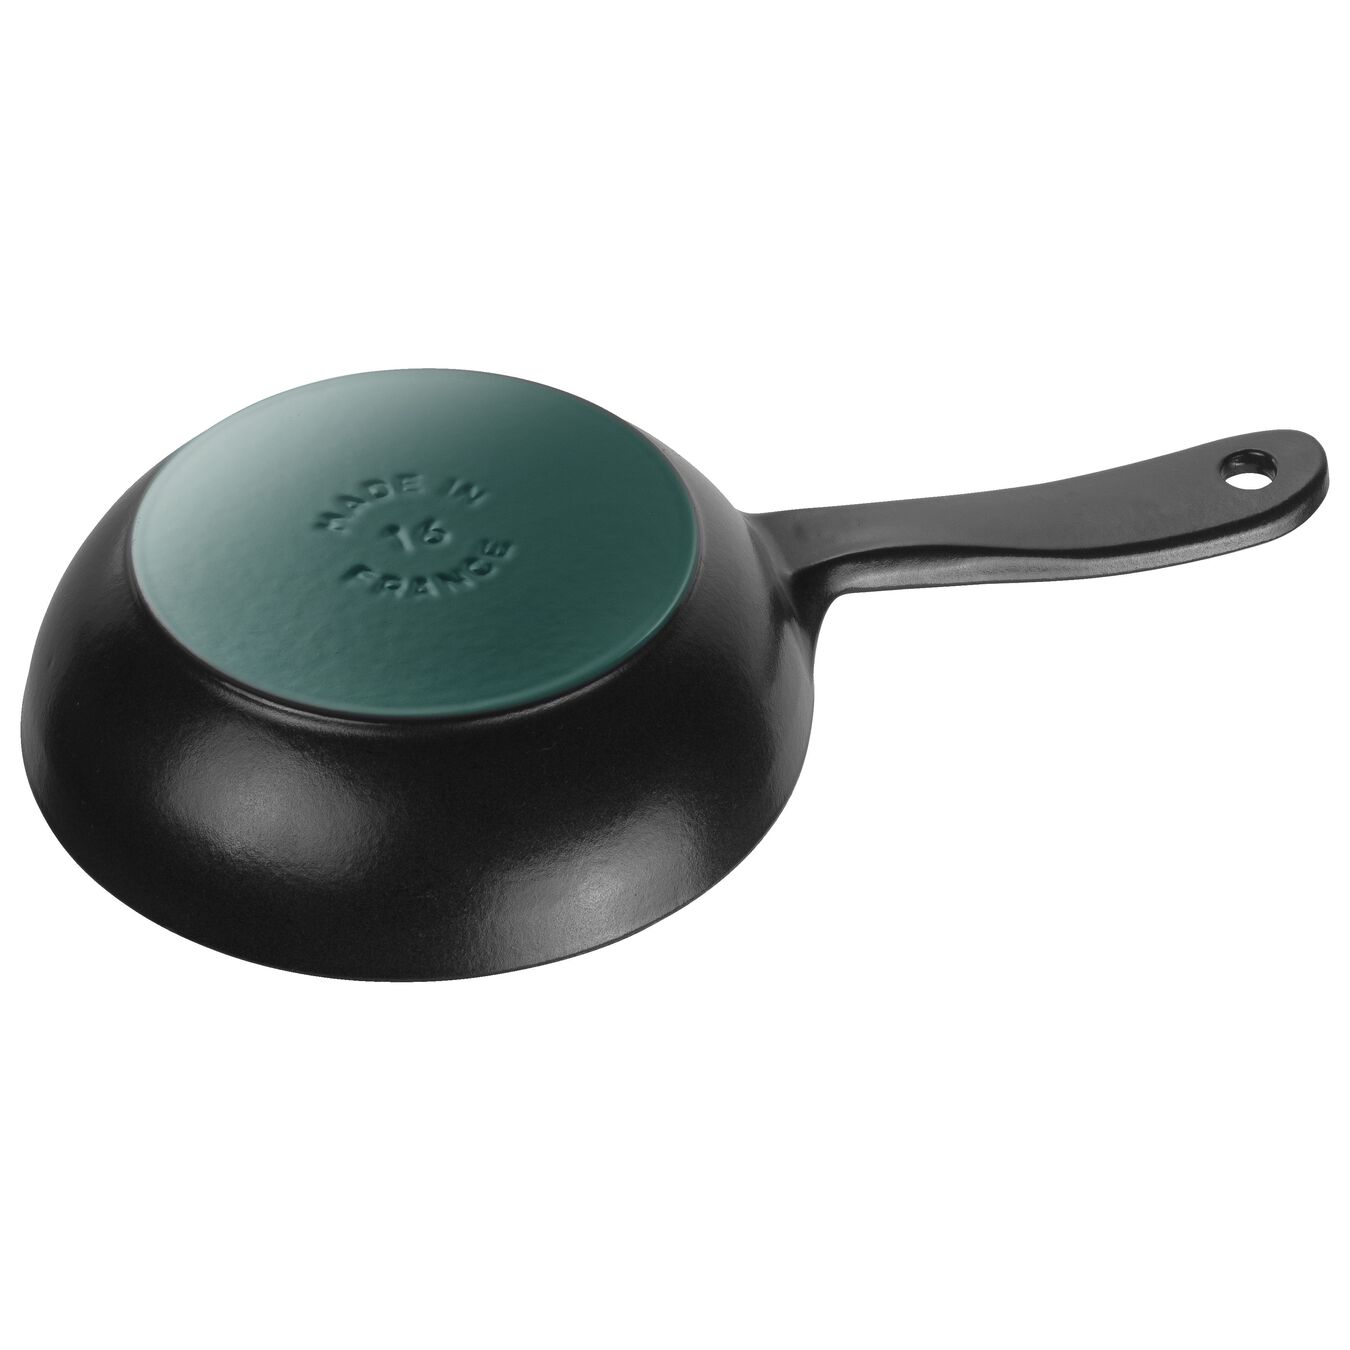 16 cm / 6.5 inch cast iron Frying pan, black,,large 2